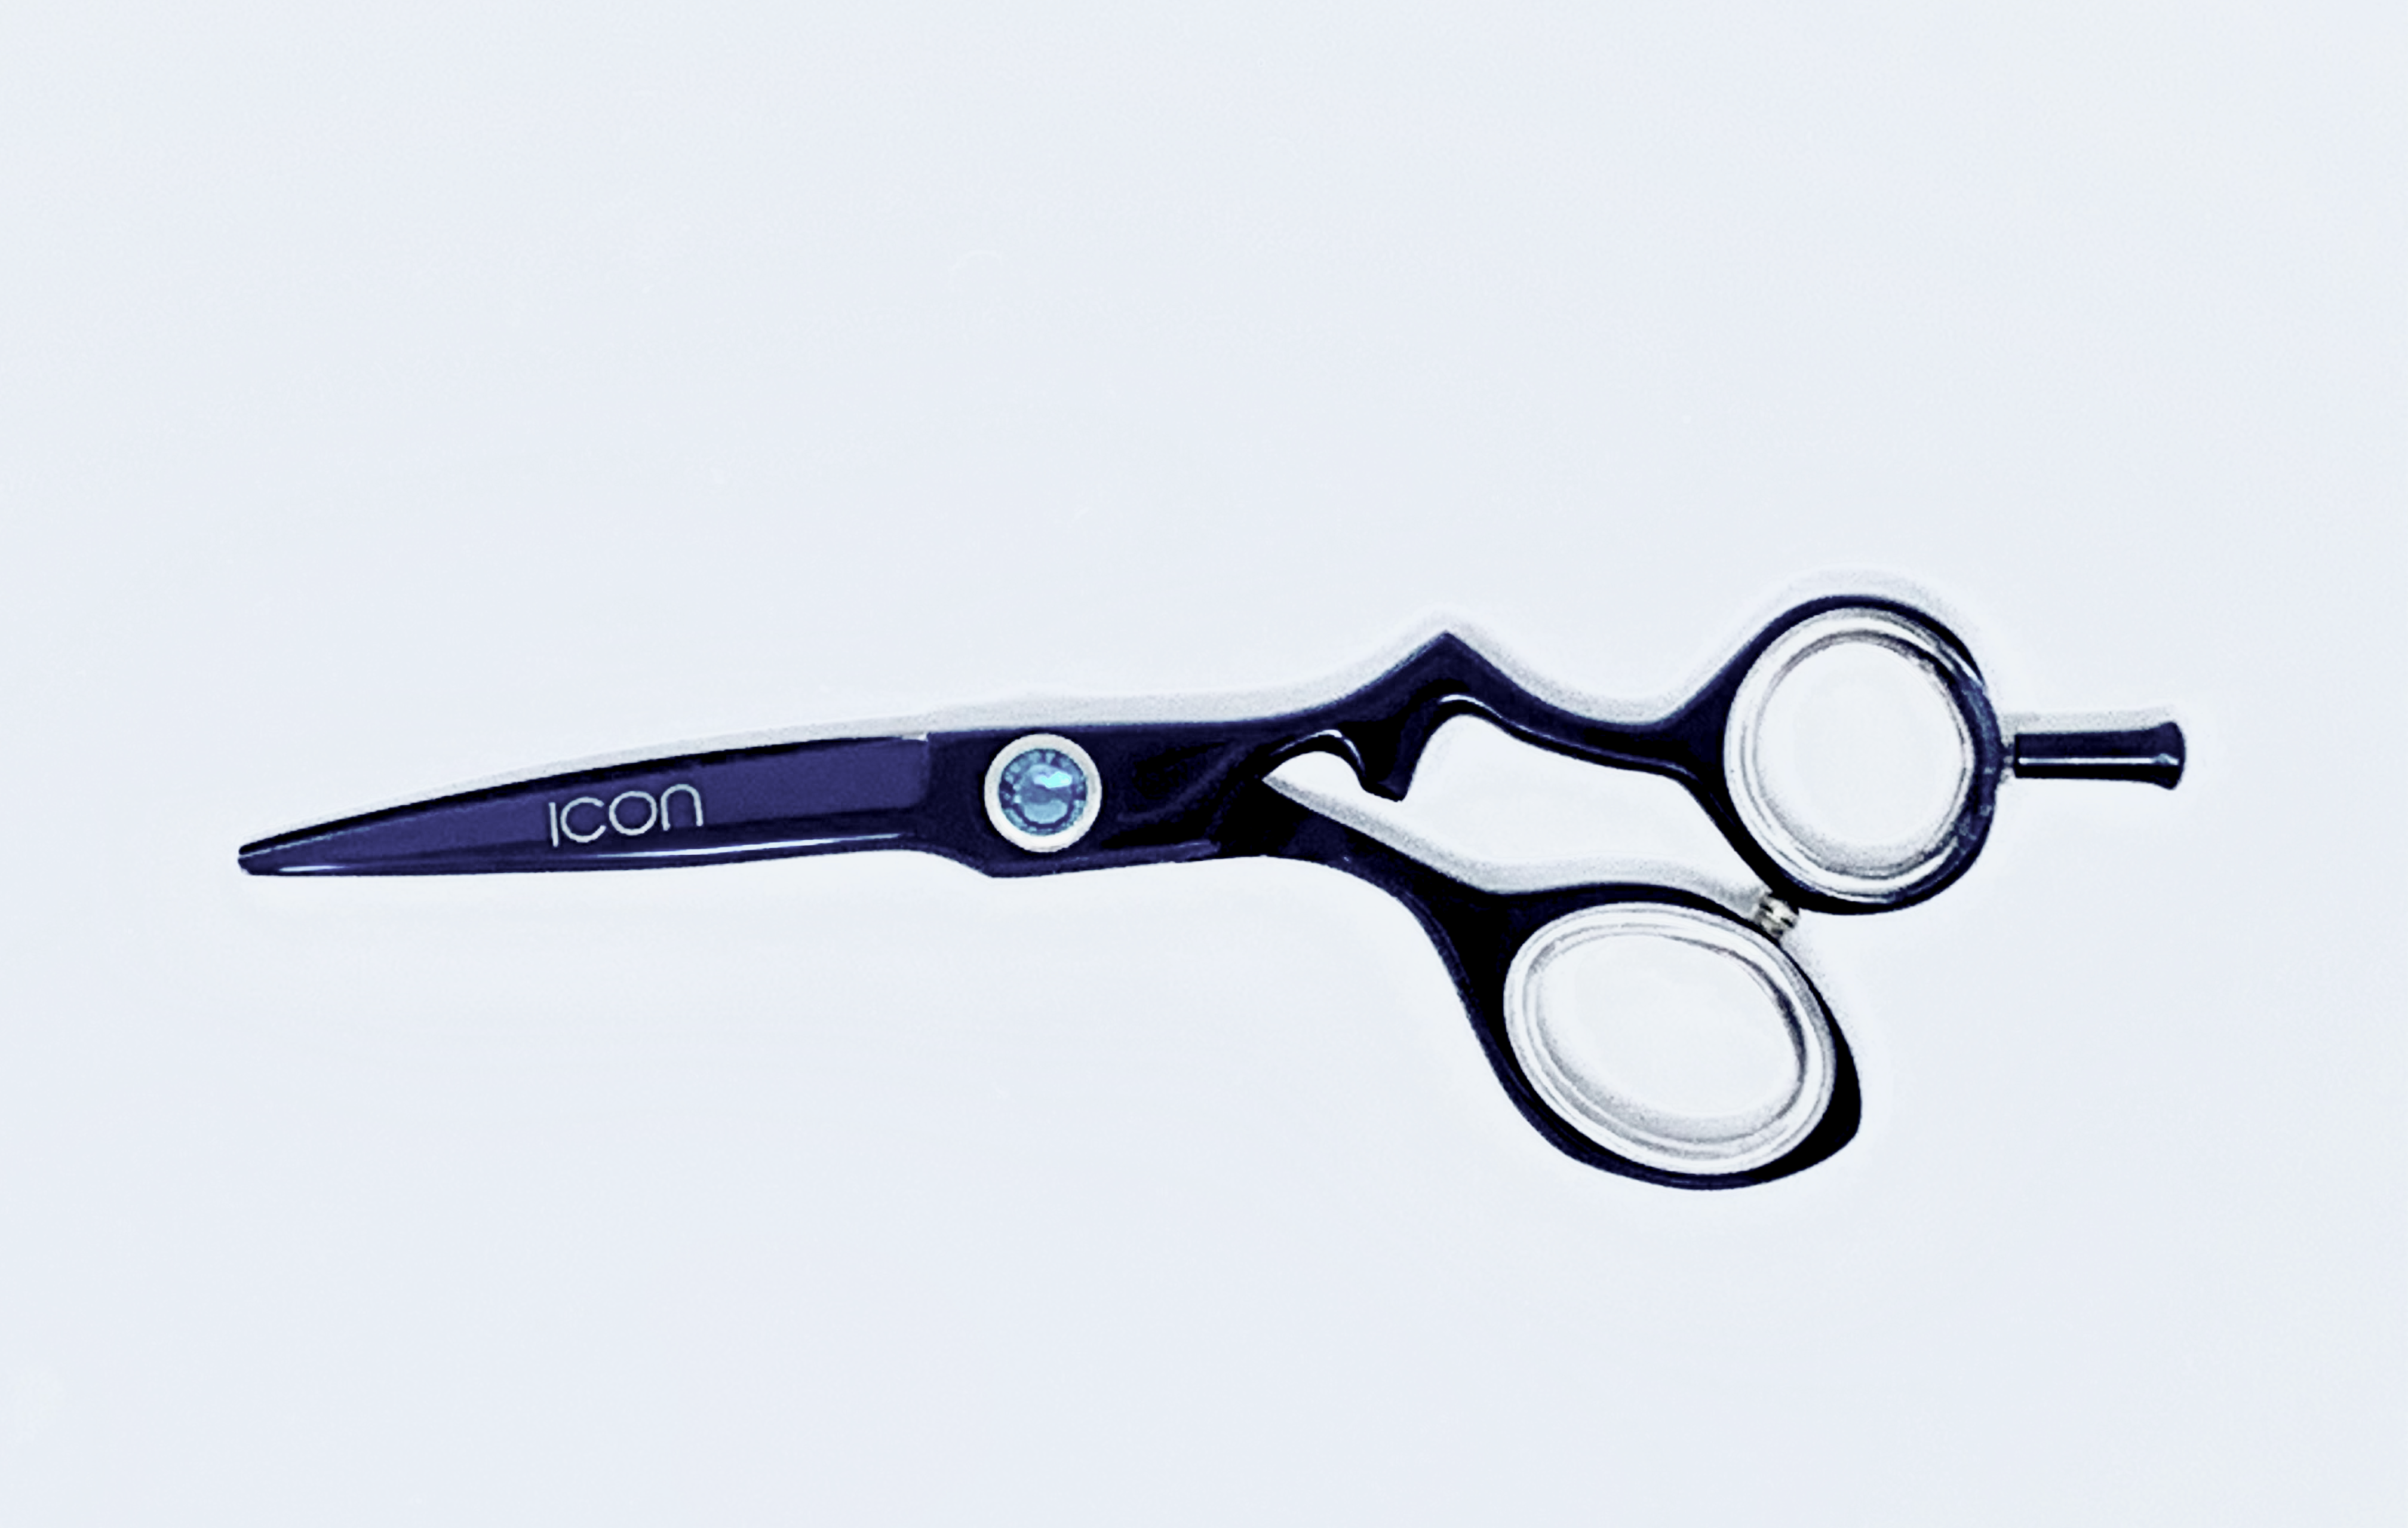 purple offset handle hair shears cosmetology salon stylist scissors